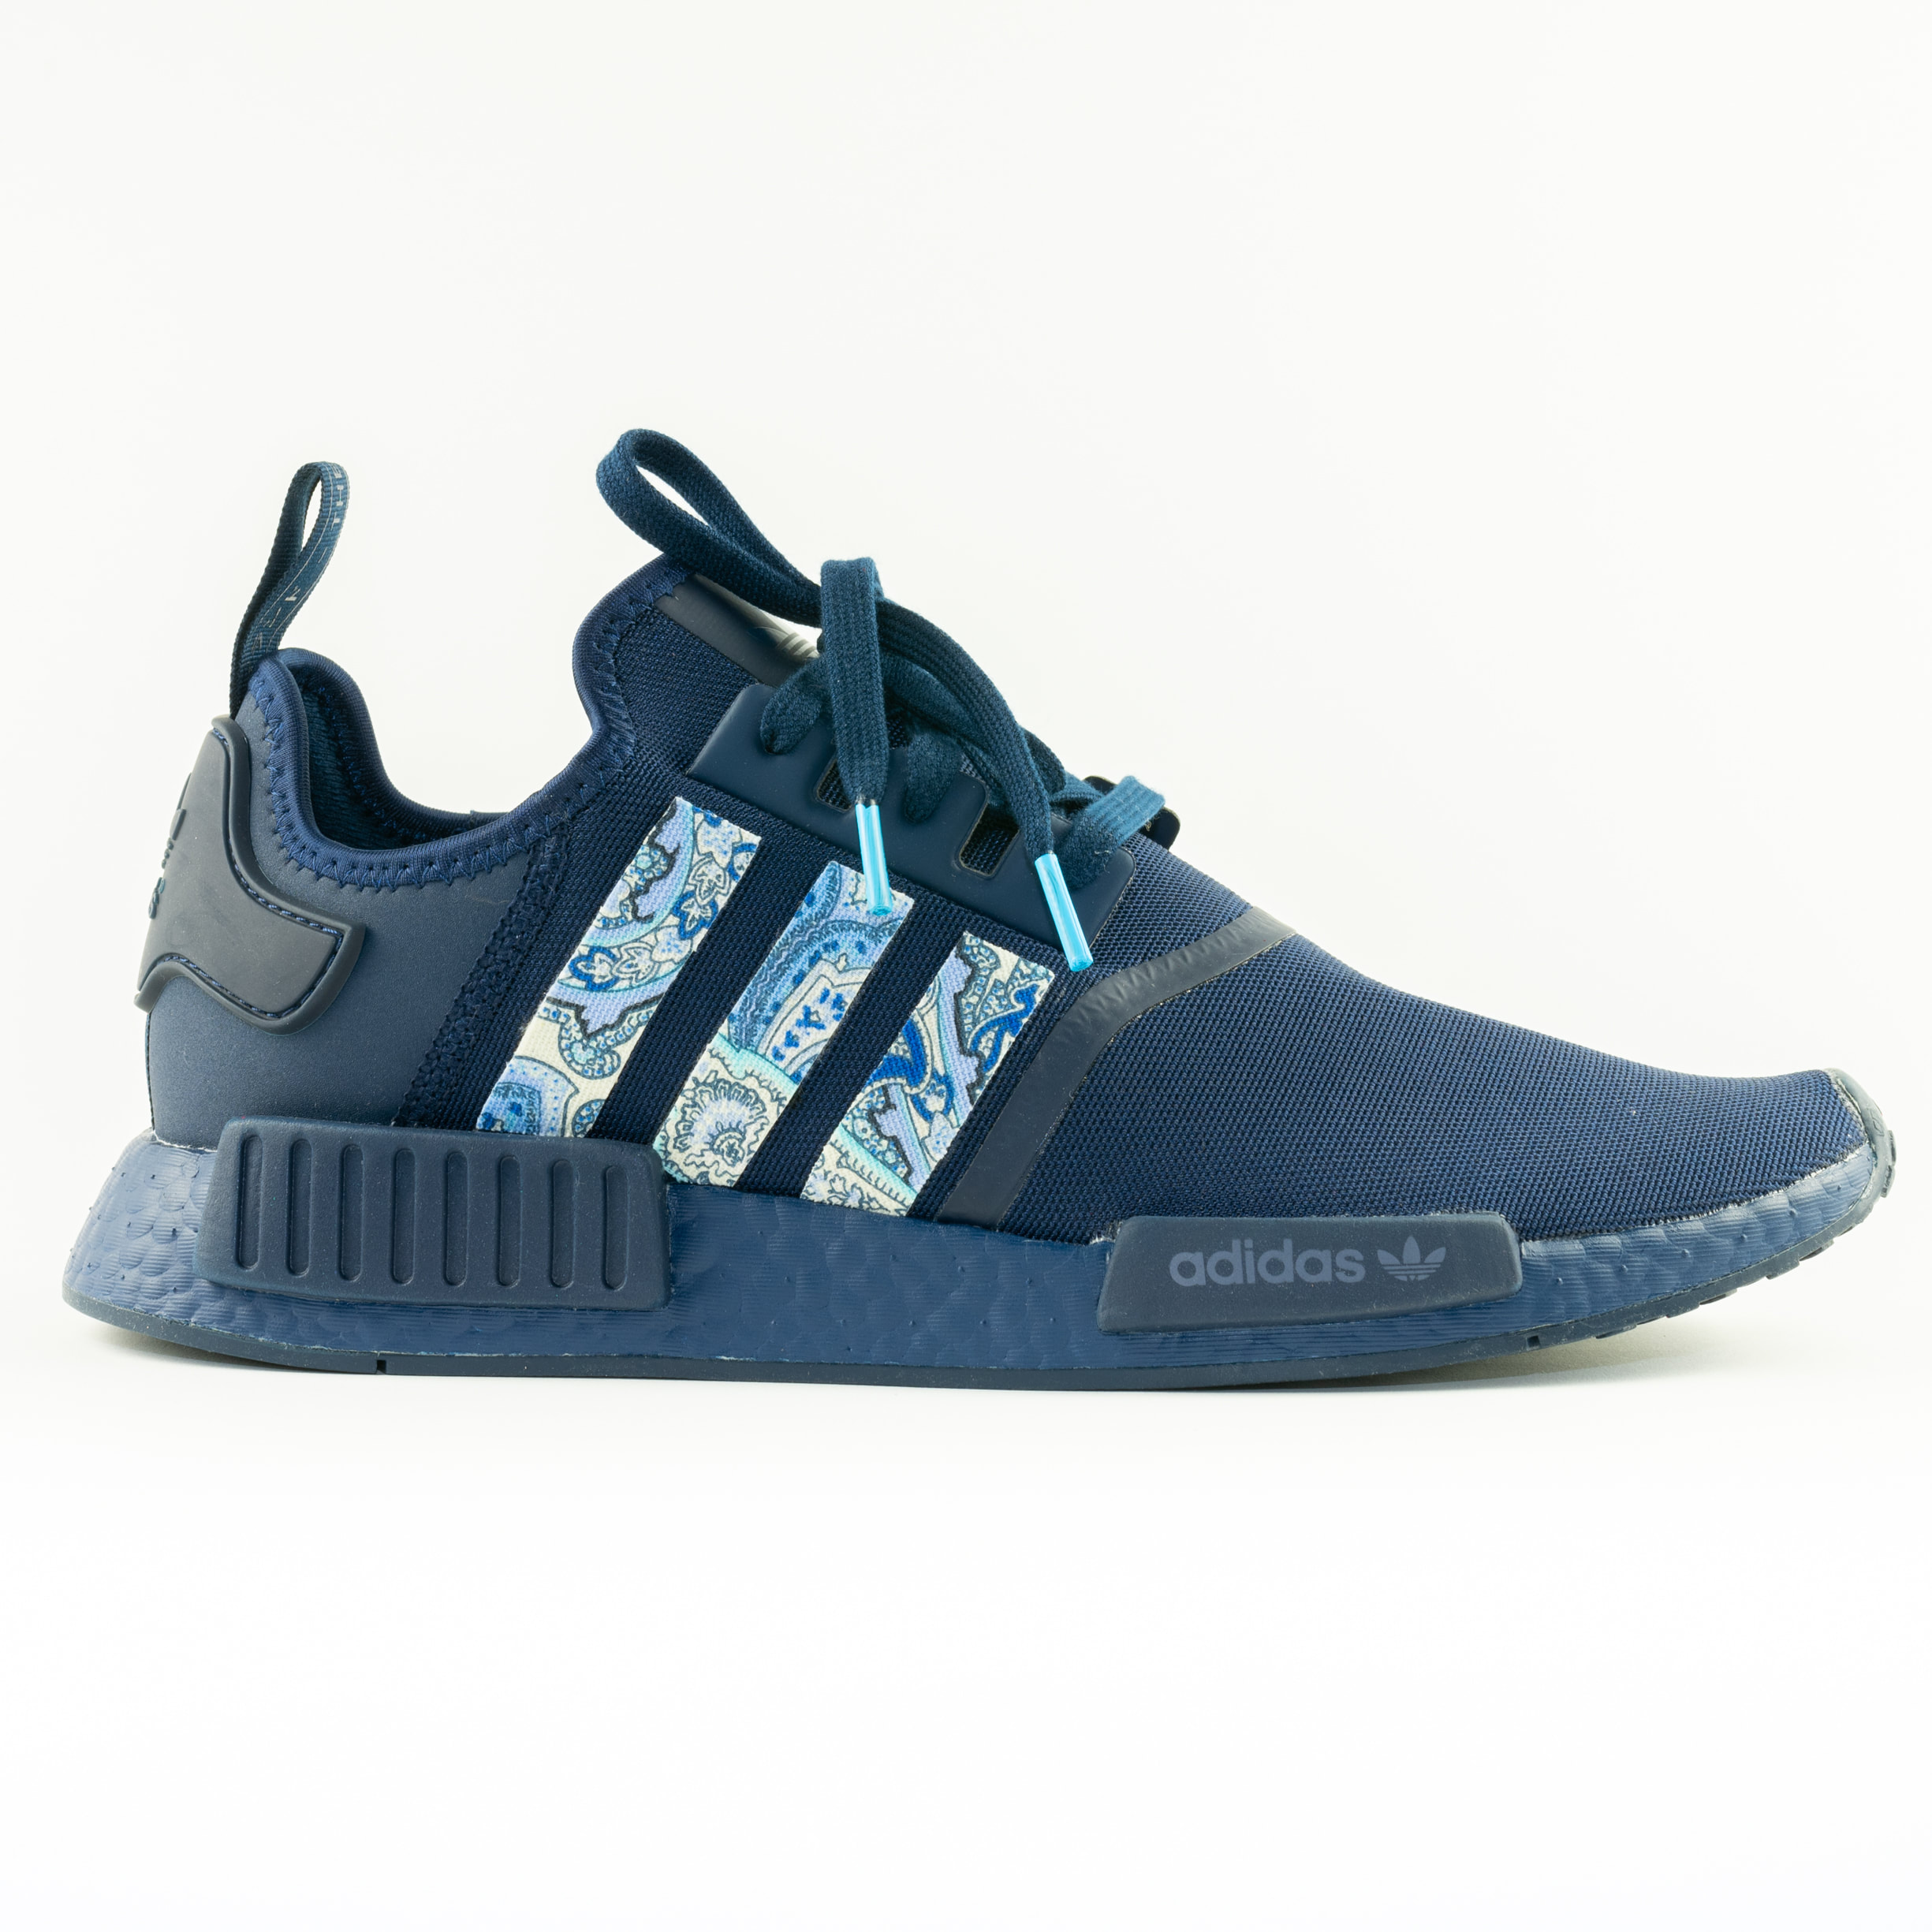 Adidas NMD R1 Neighborhood Men Casual Running Shoe Blue Paisley Sneaker  Trainer